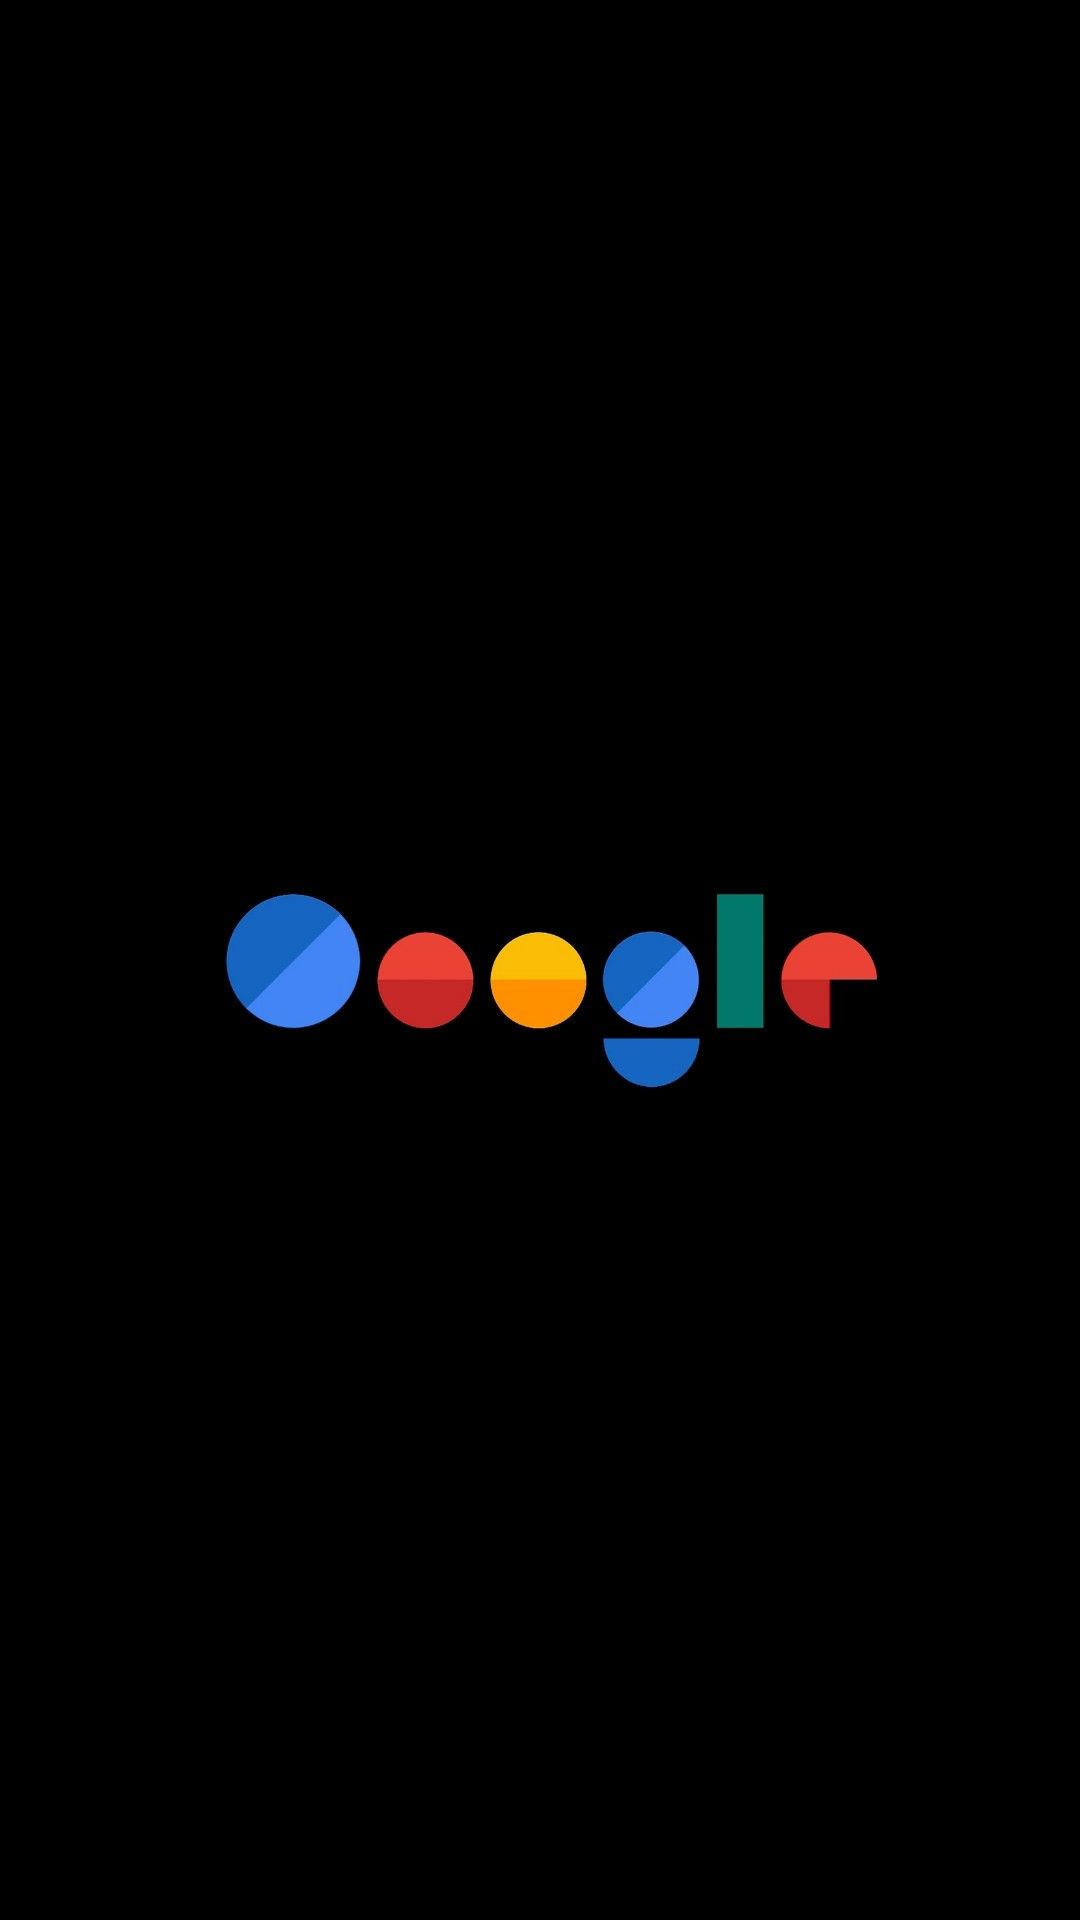 google mobile wallpaper,leggero,buio,cerchio,font,notte